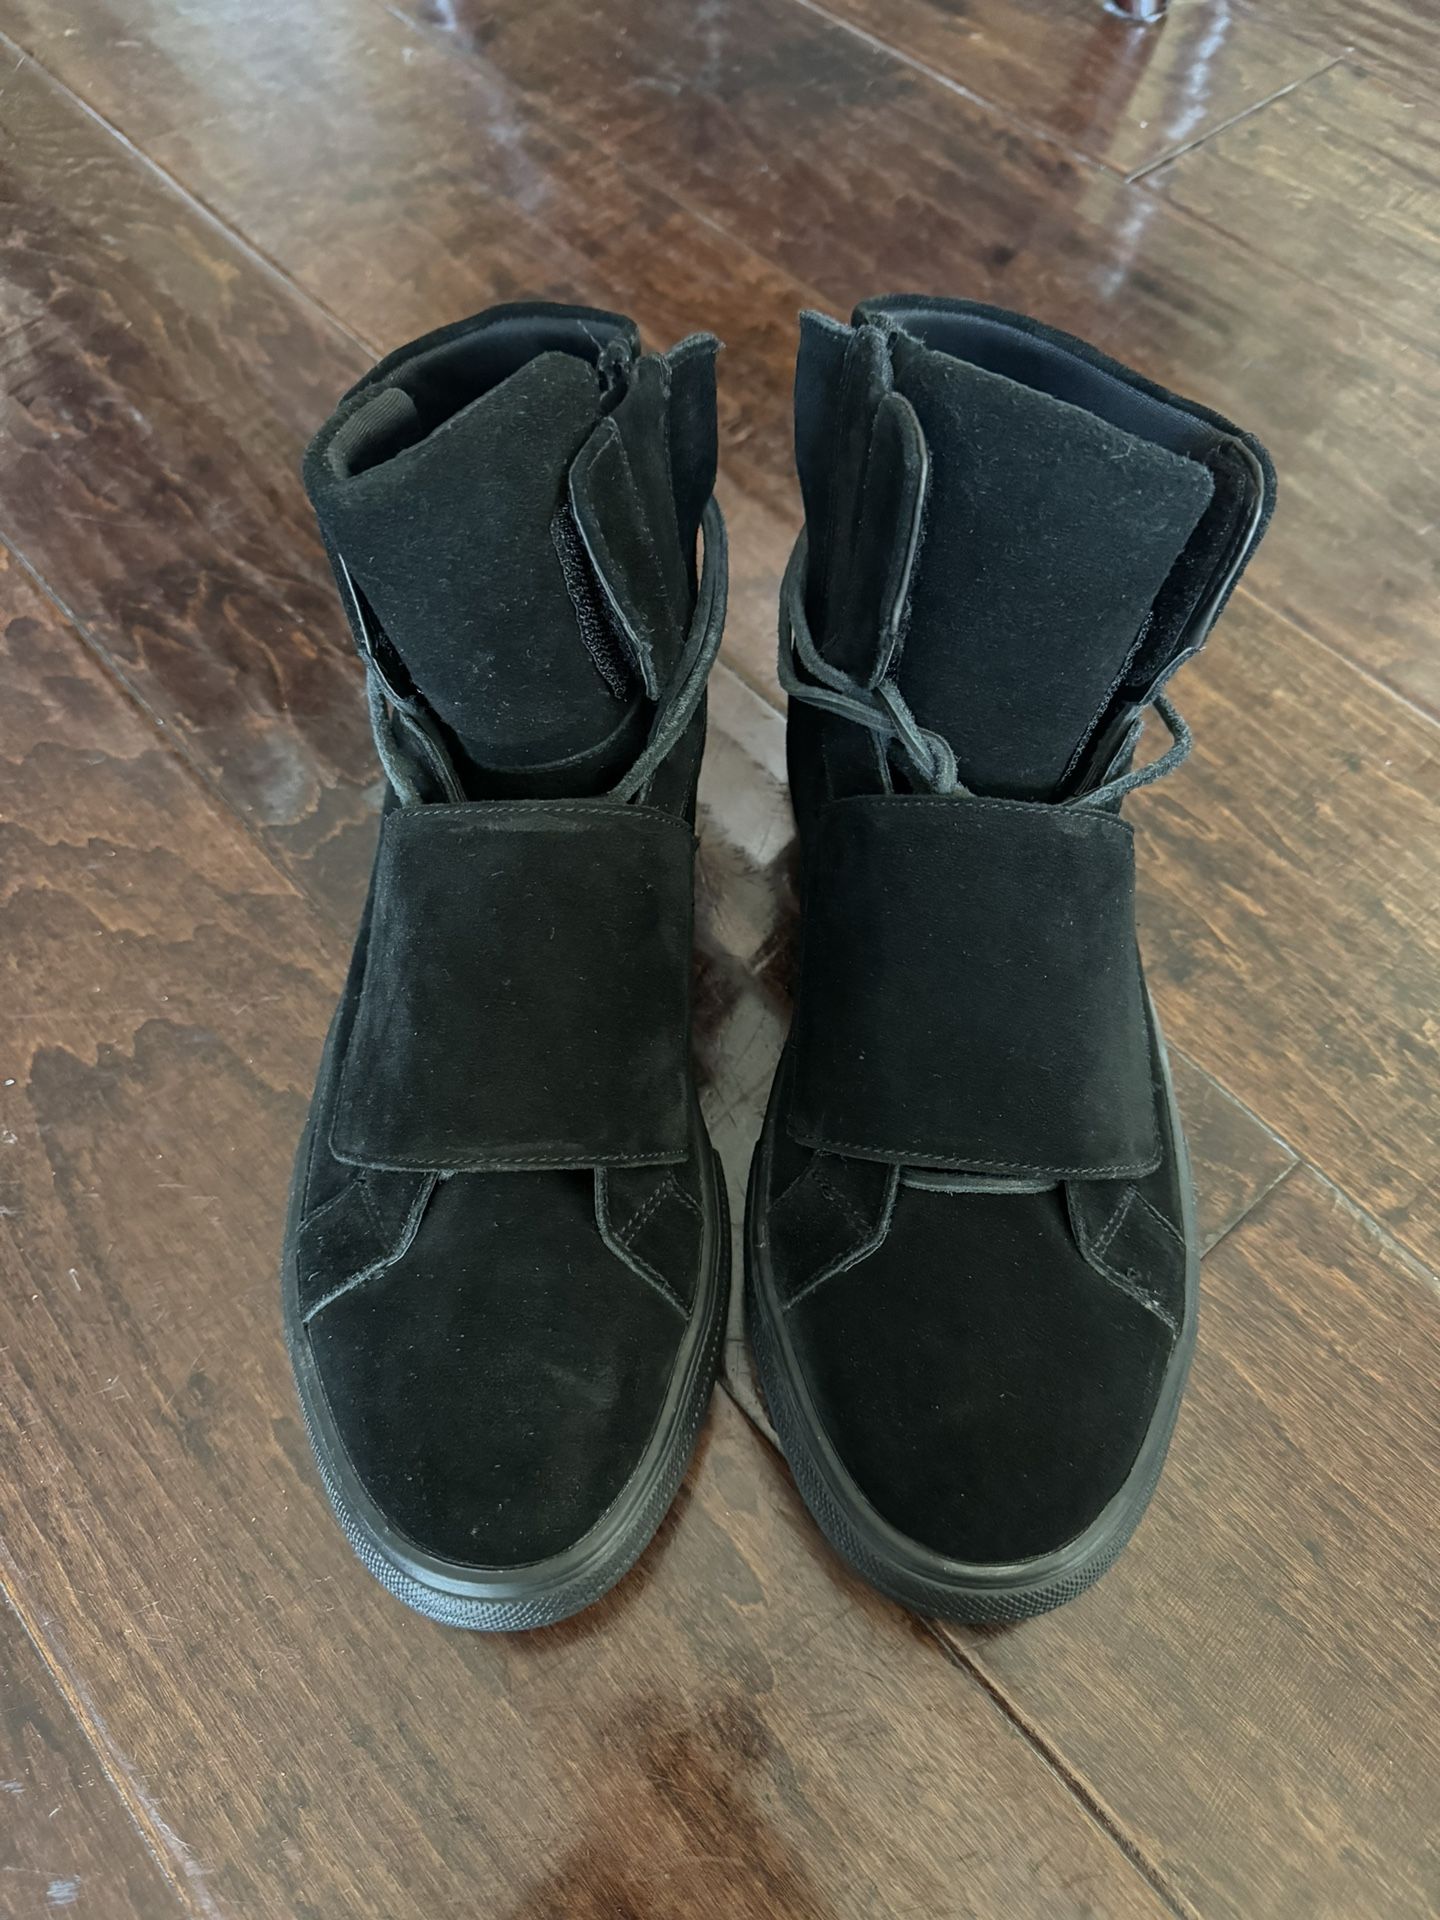 Aldo Alalisien Suede Black Men’s Boots. Size: 9.5. New! 